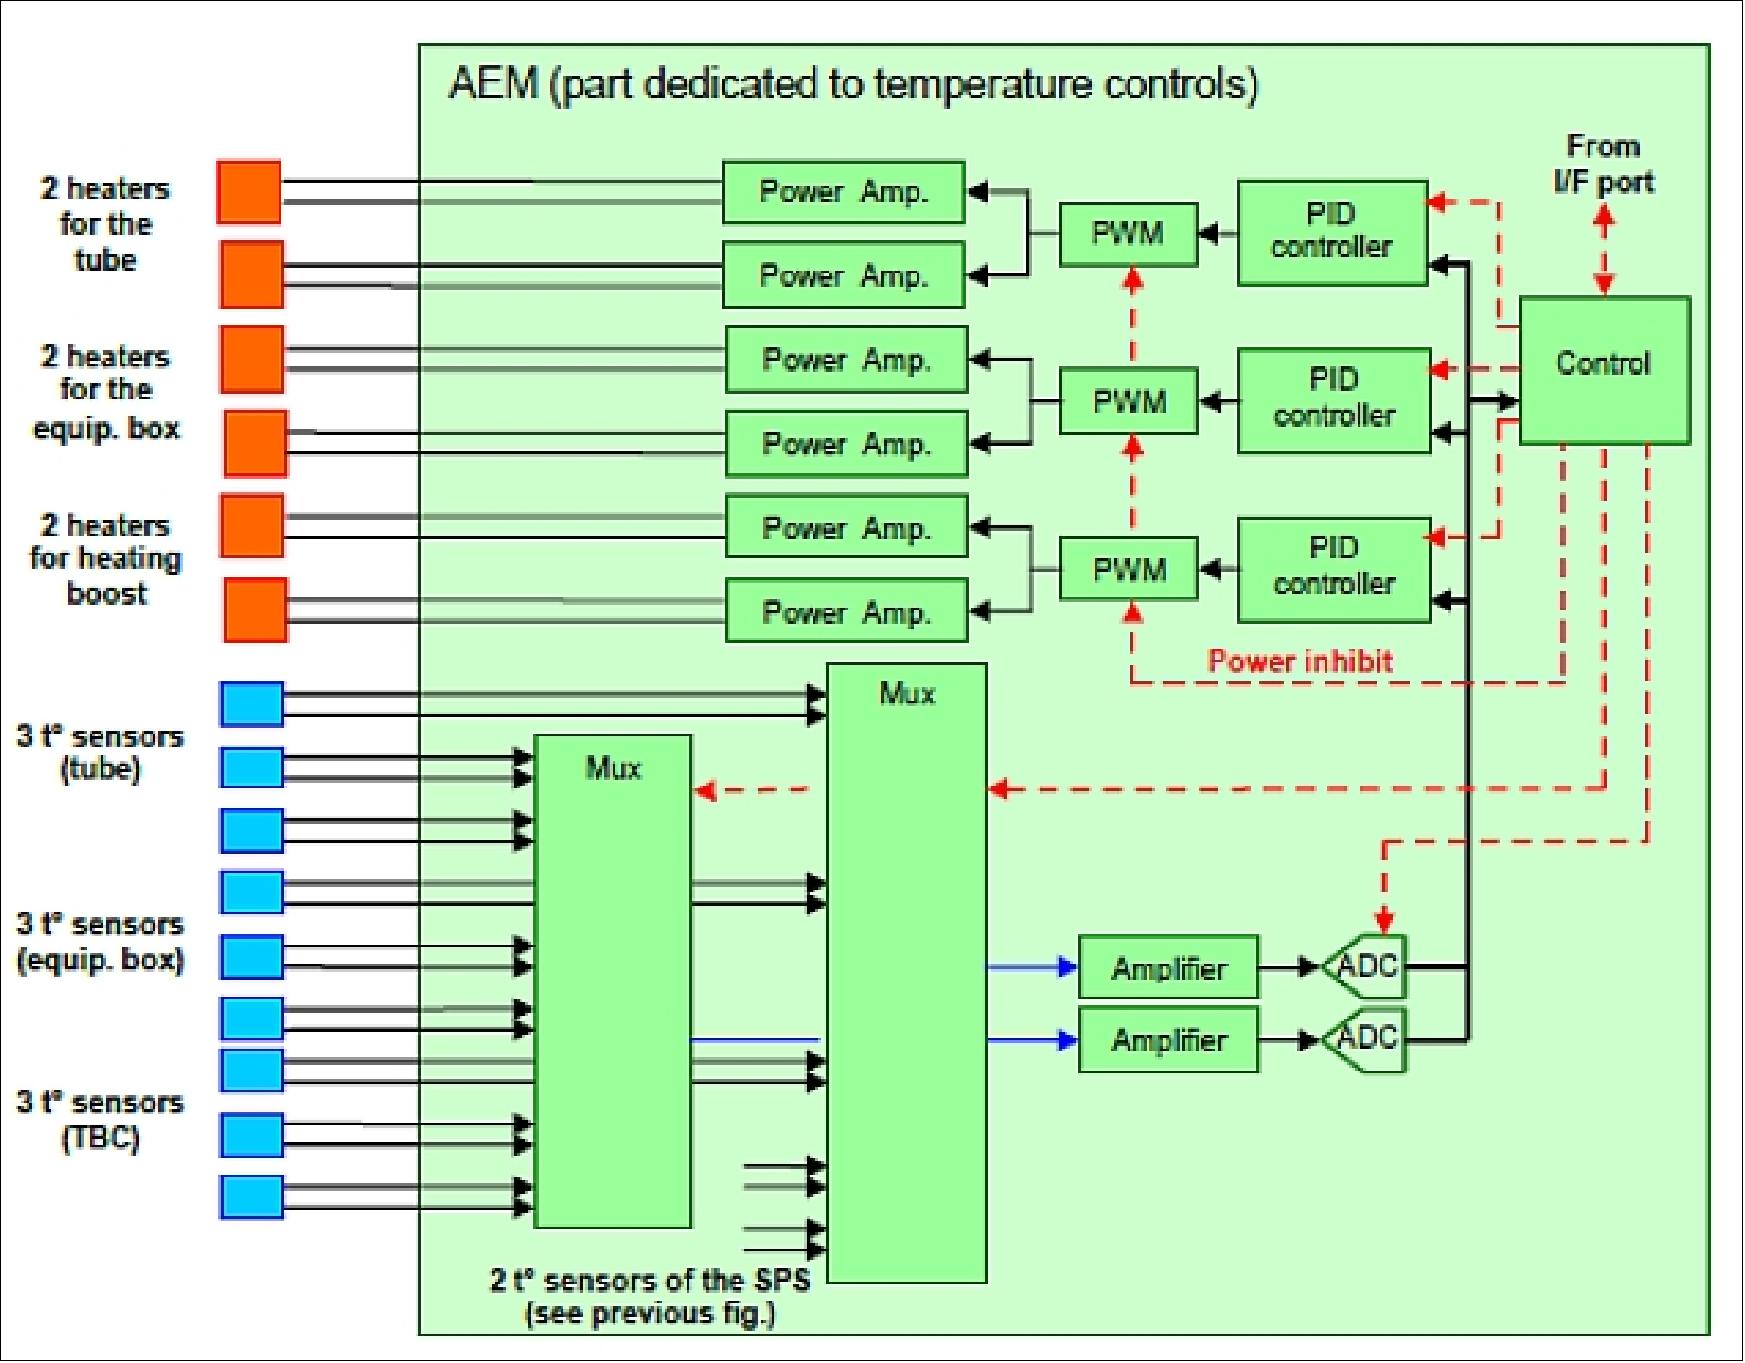 Figure 59: The AEM architecture for thermal control (image credit: ASPIICS consortium)